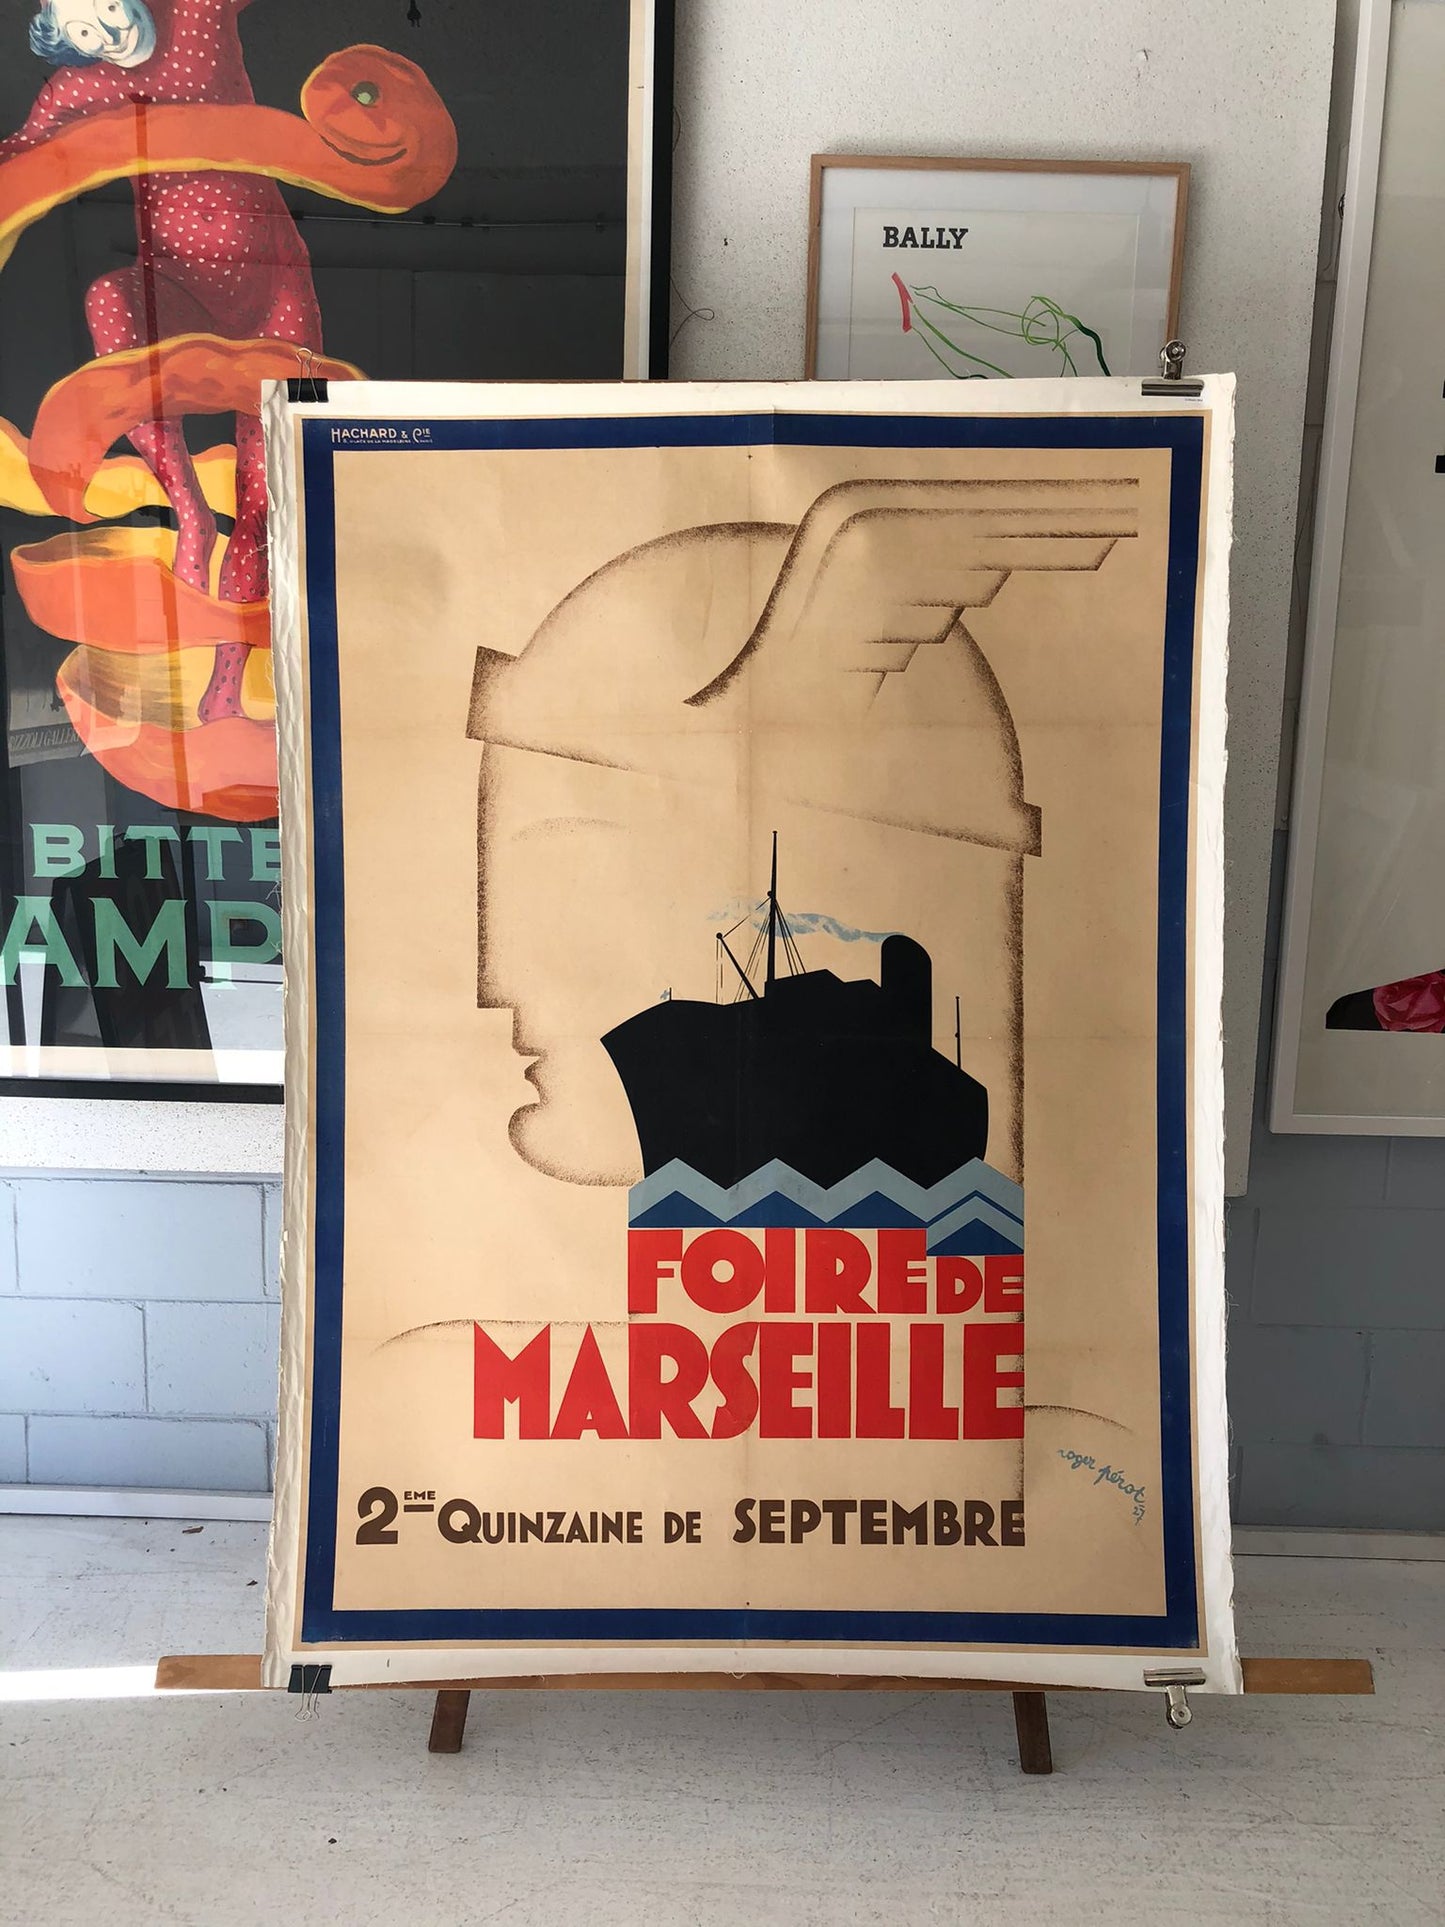 Foire de Marseille by Roger Perot